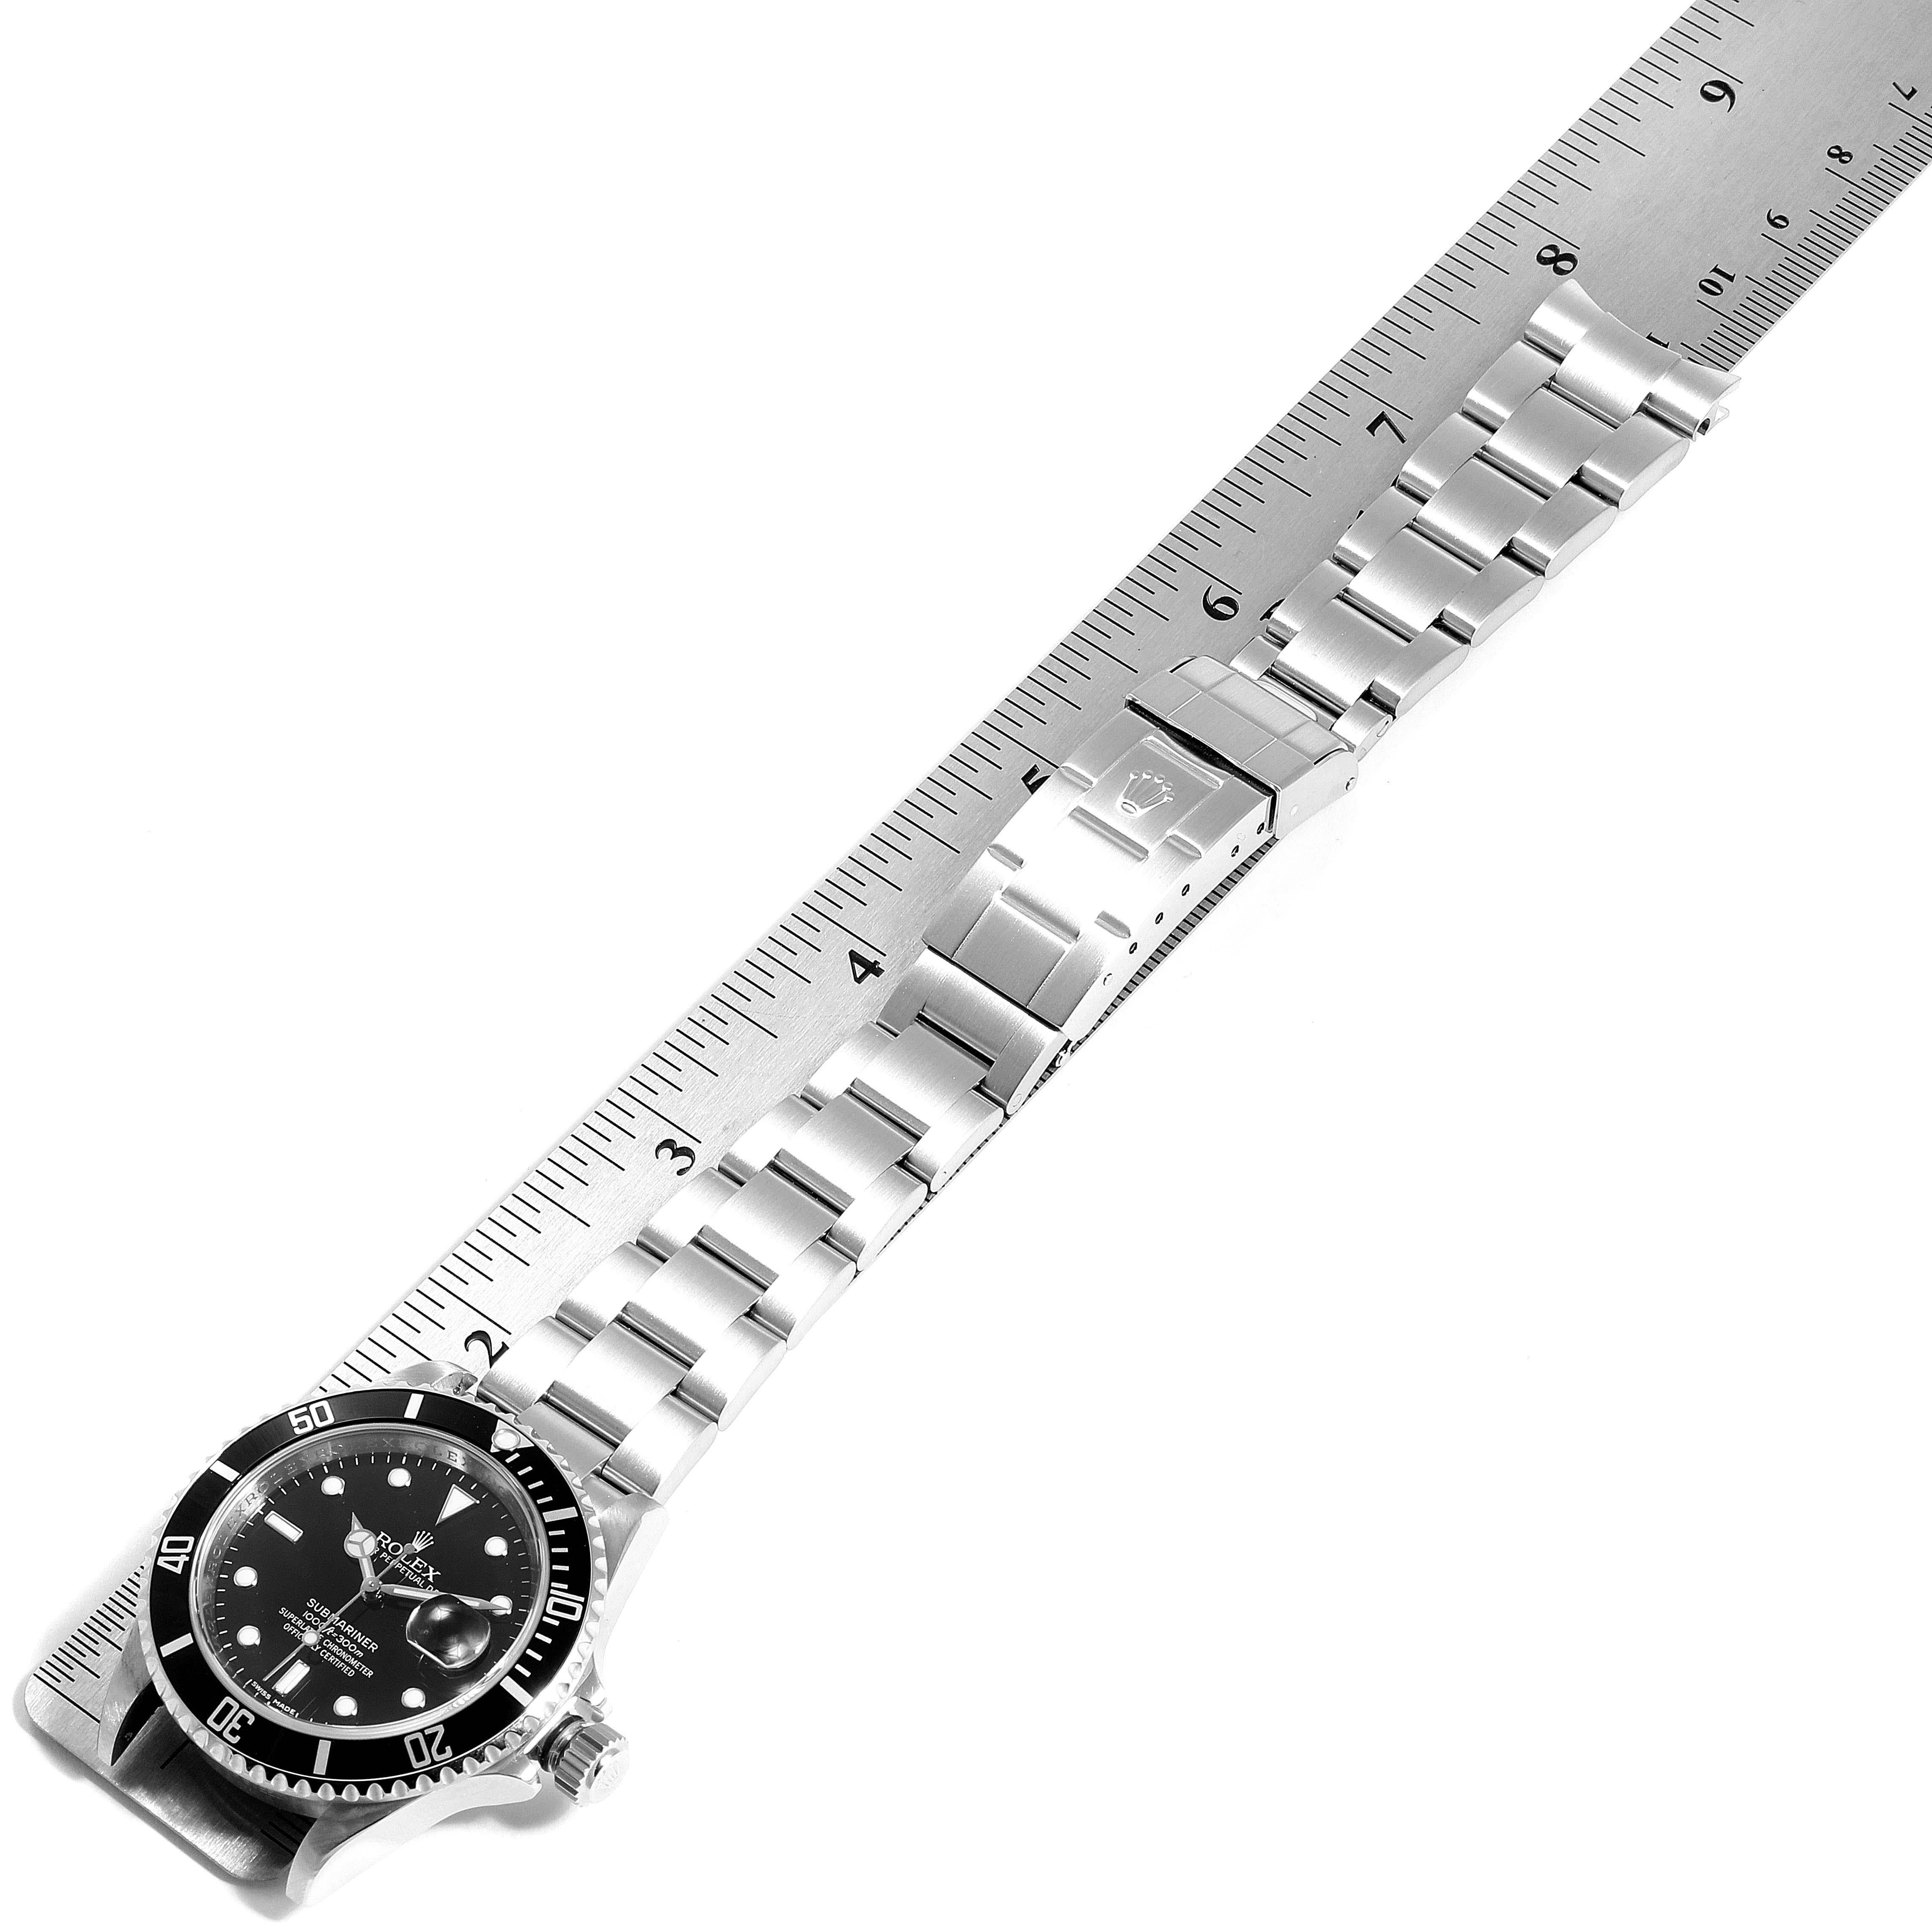 Rolex Submariner Date Stainless Steel Men's Watch 16610 Box Card 7